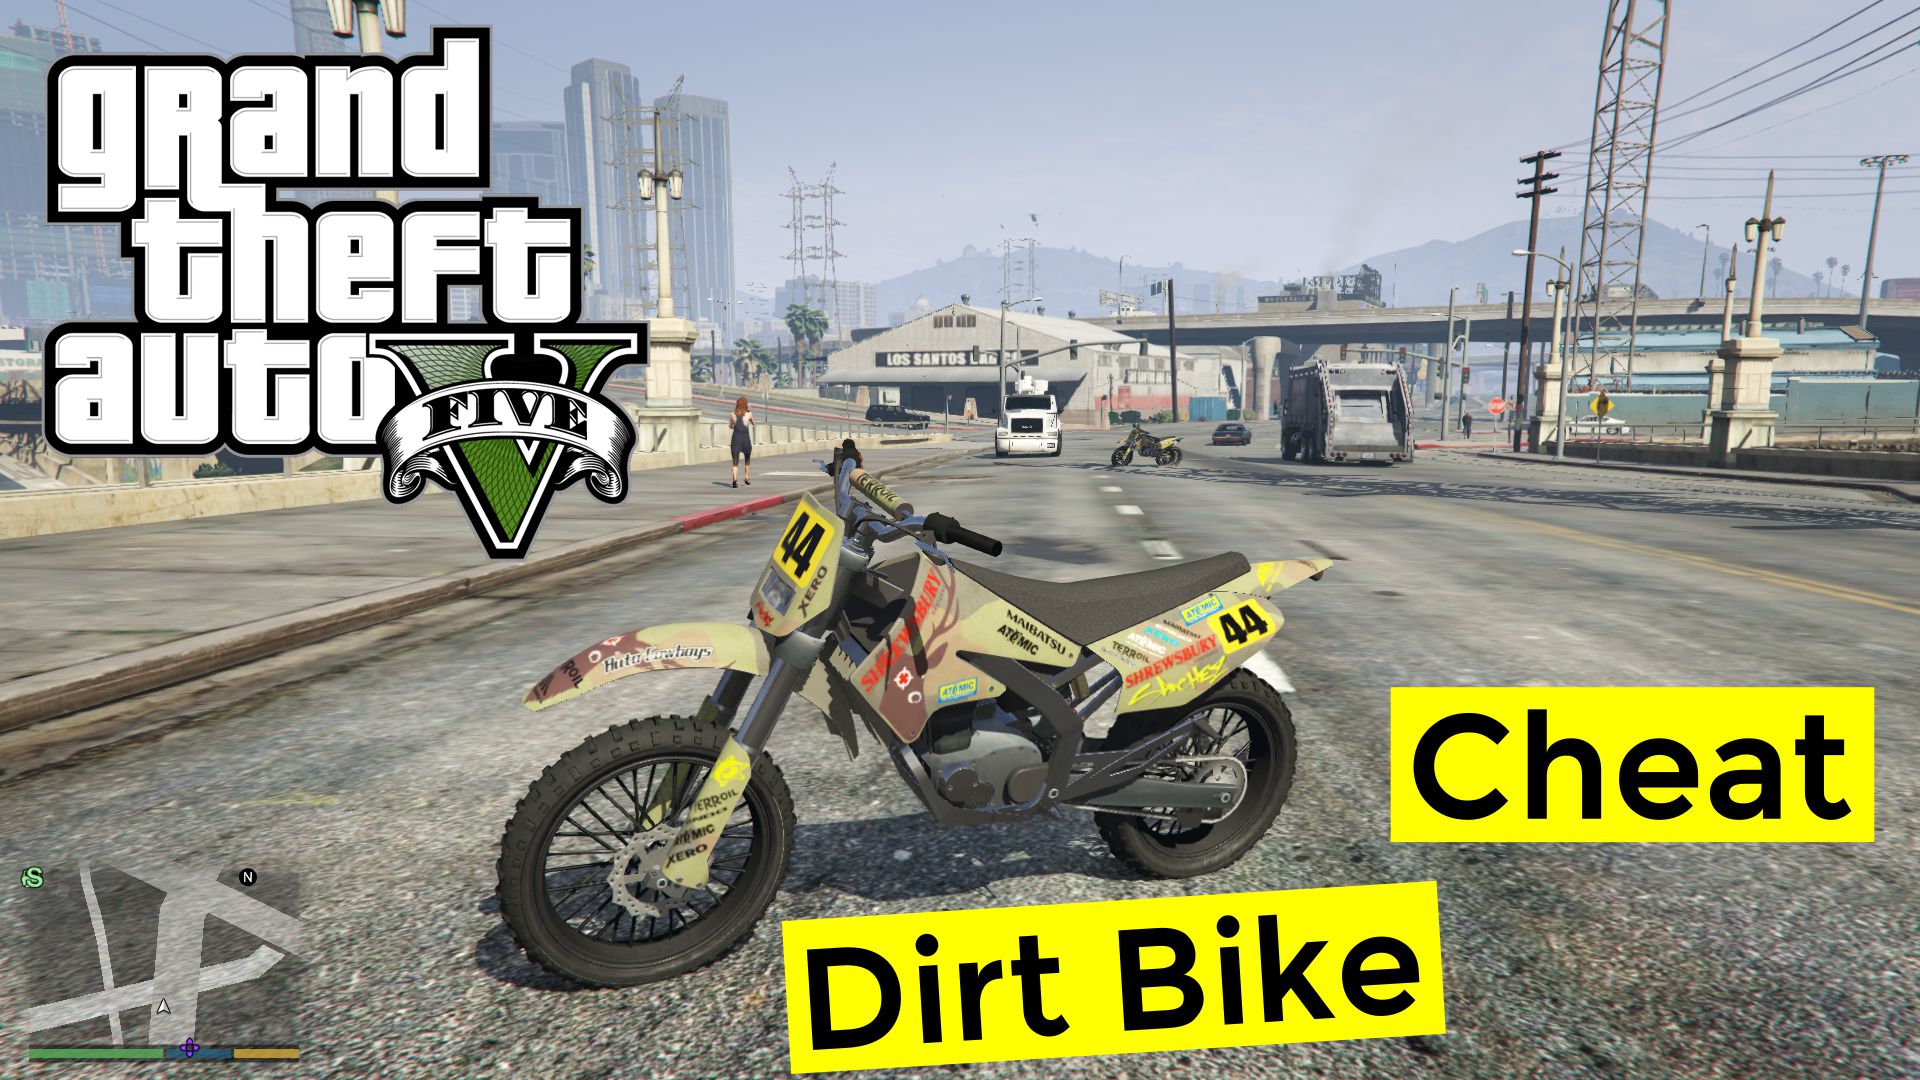 Cheat for Dirt Bike di GTA 5 PC, Xbox, PlayStation